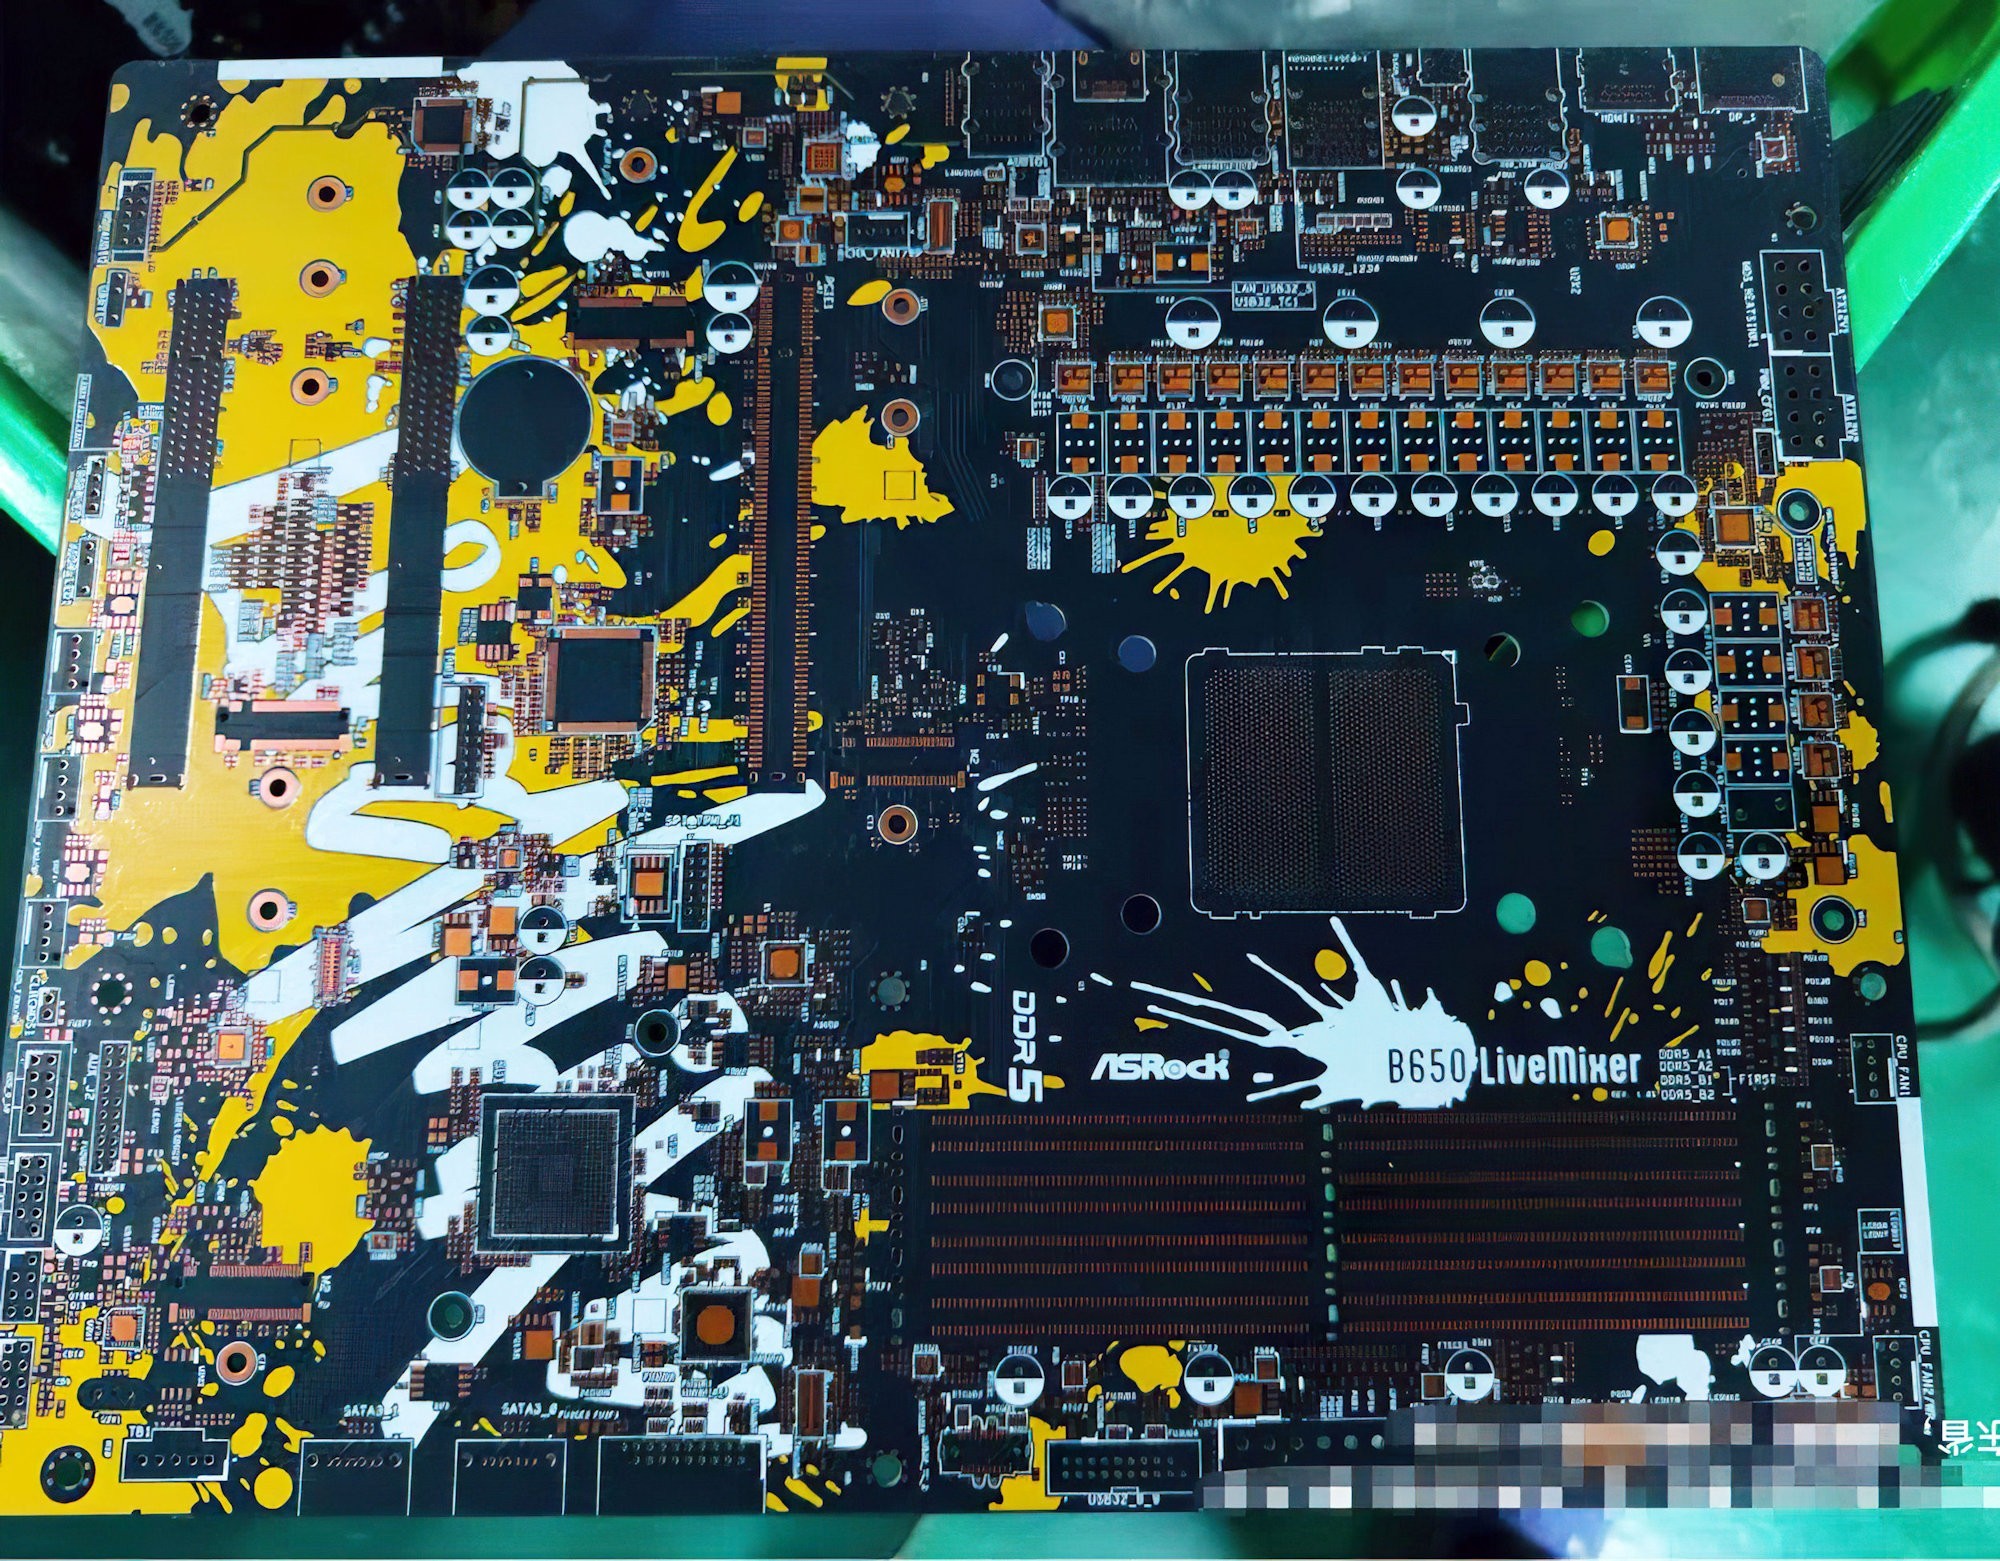 ASRock's AMD B650 LiveMixer motherboard is here to make a splash 